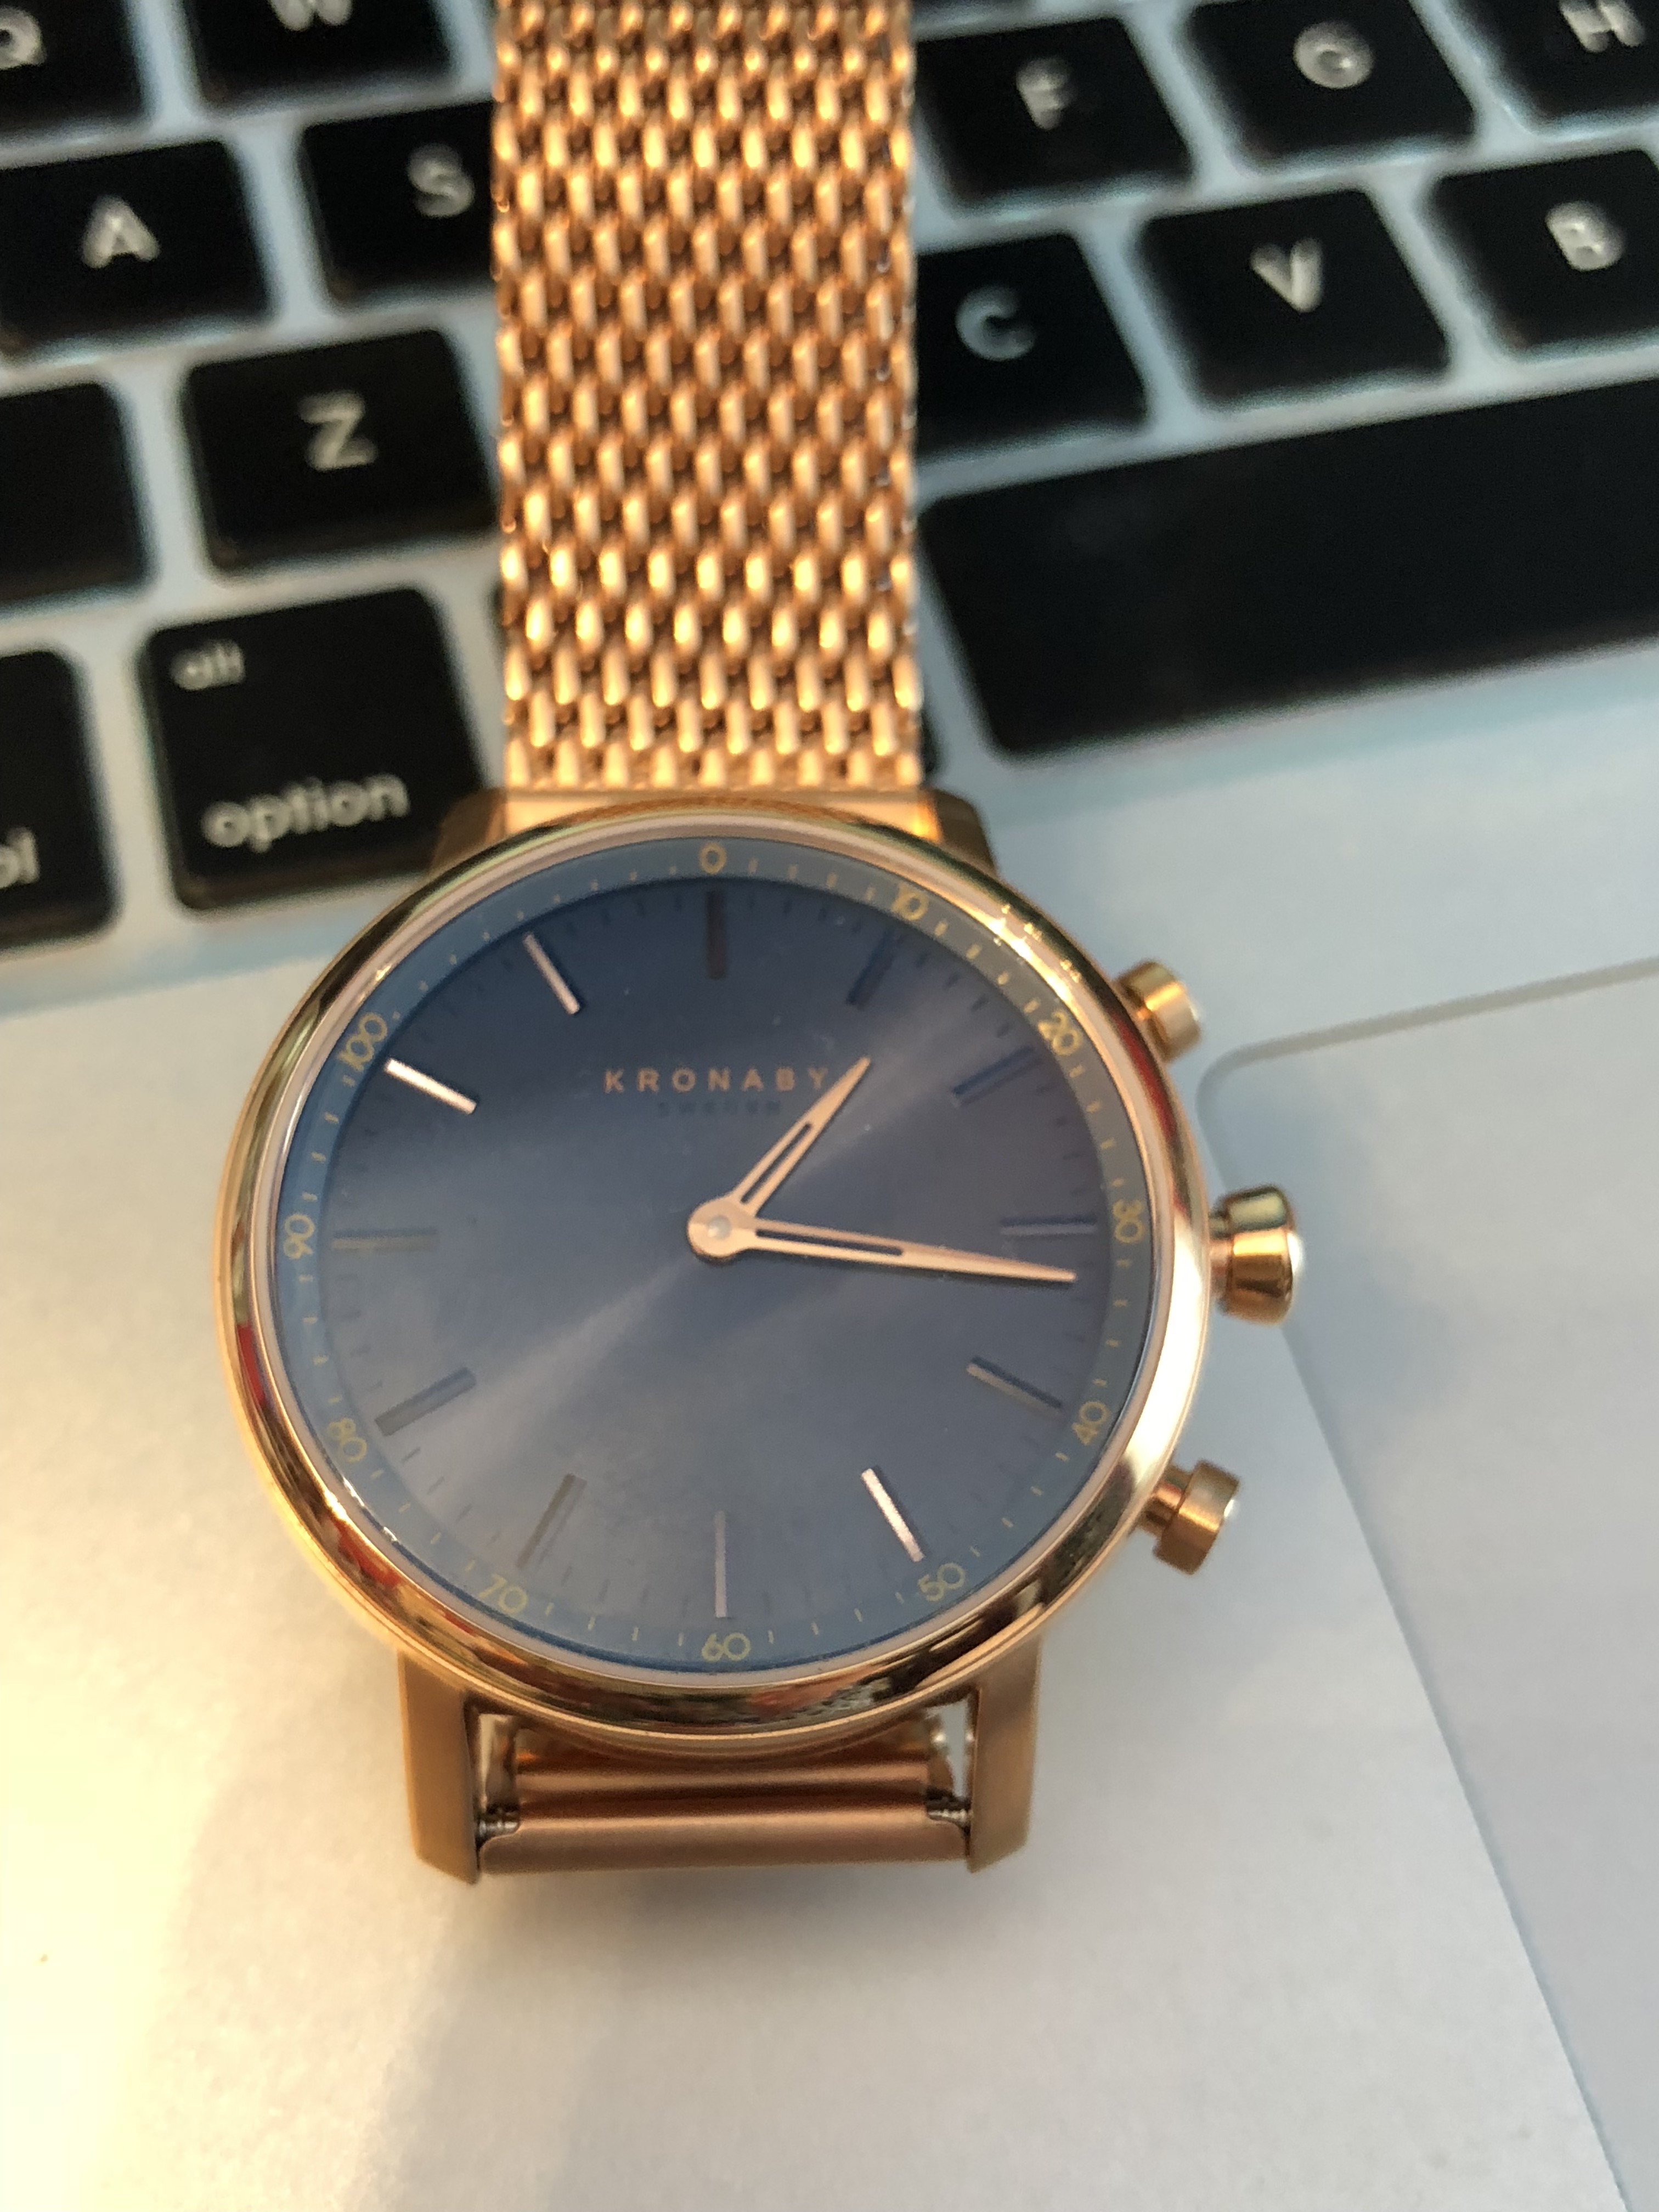 mestre neutral kop Watch Review: Kronaby Carat Connected Watch